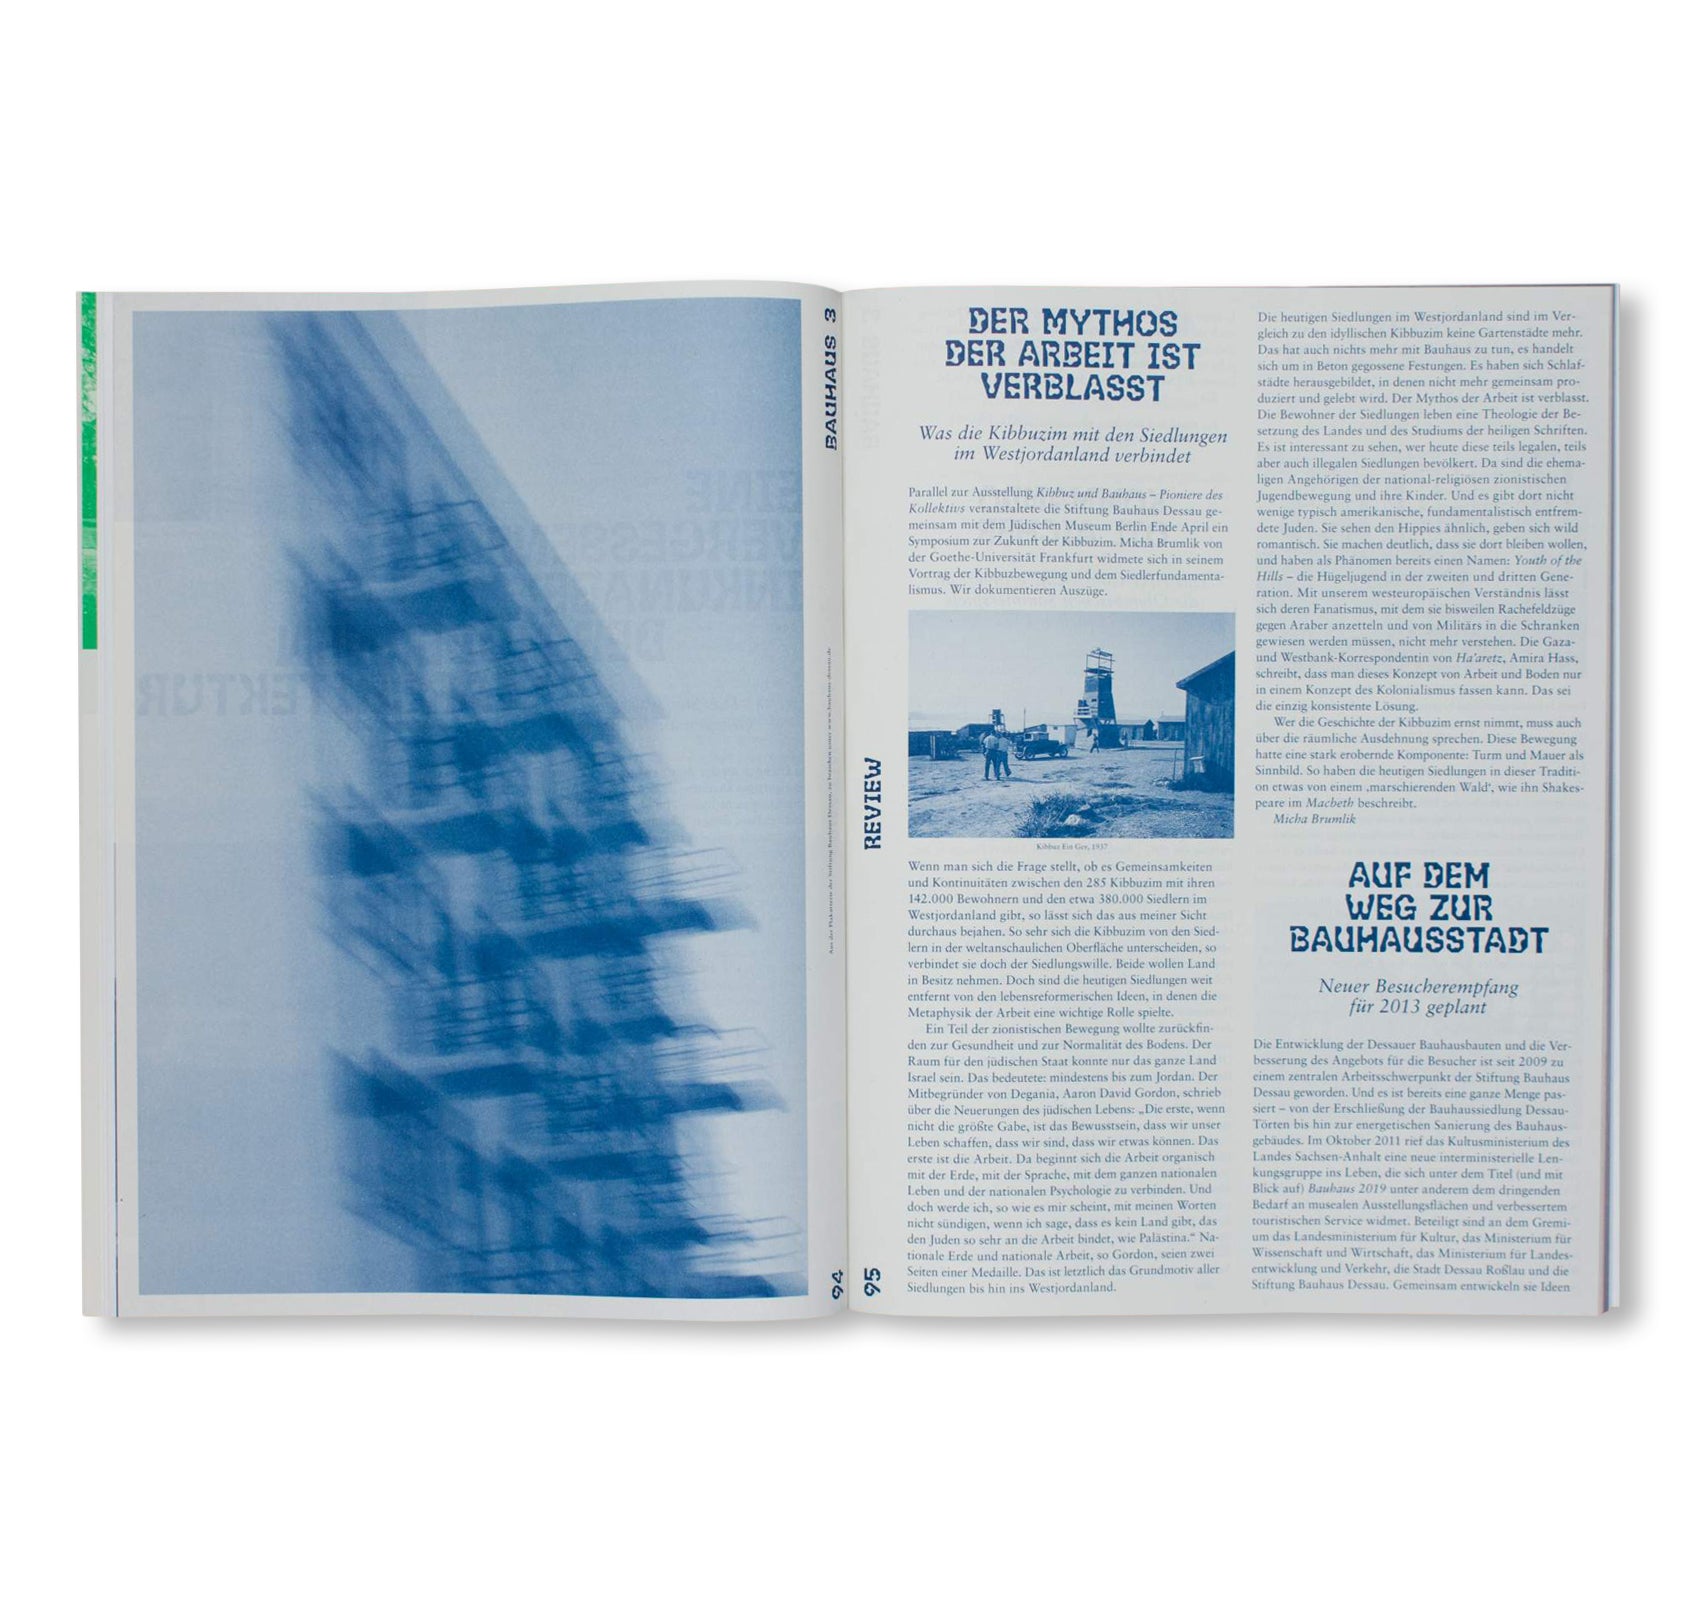 THINGS - BAUHAUS 3. The Bauhaus Dessau Foundation's Magazine by Stiftung Bauhaus Dessau